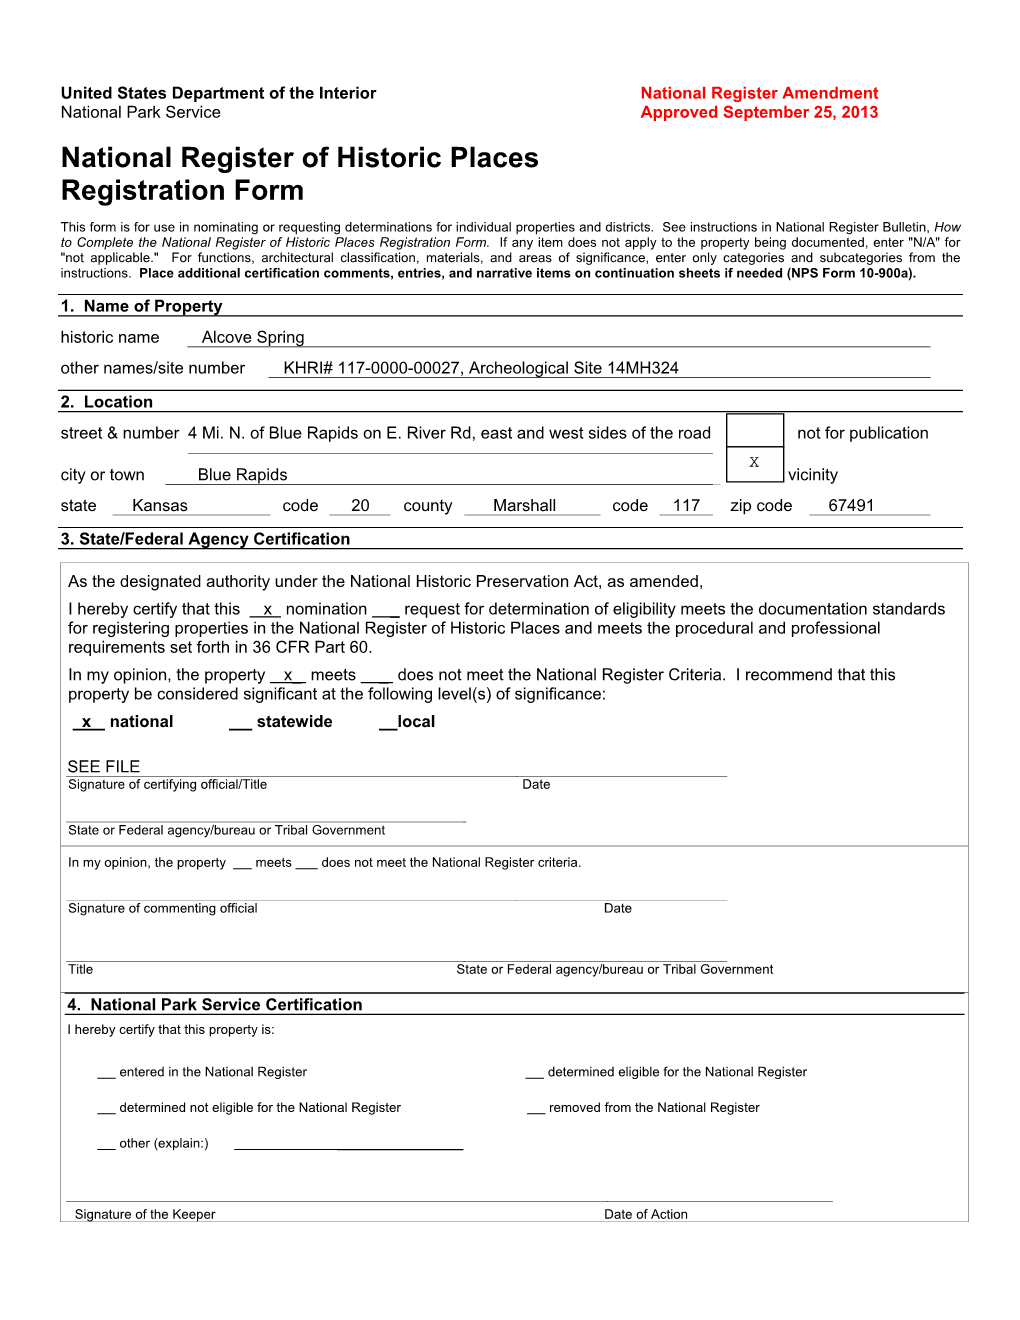 Alcove Spring National Register Nomination